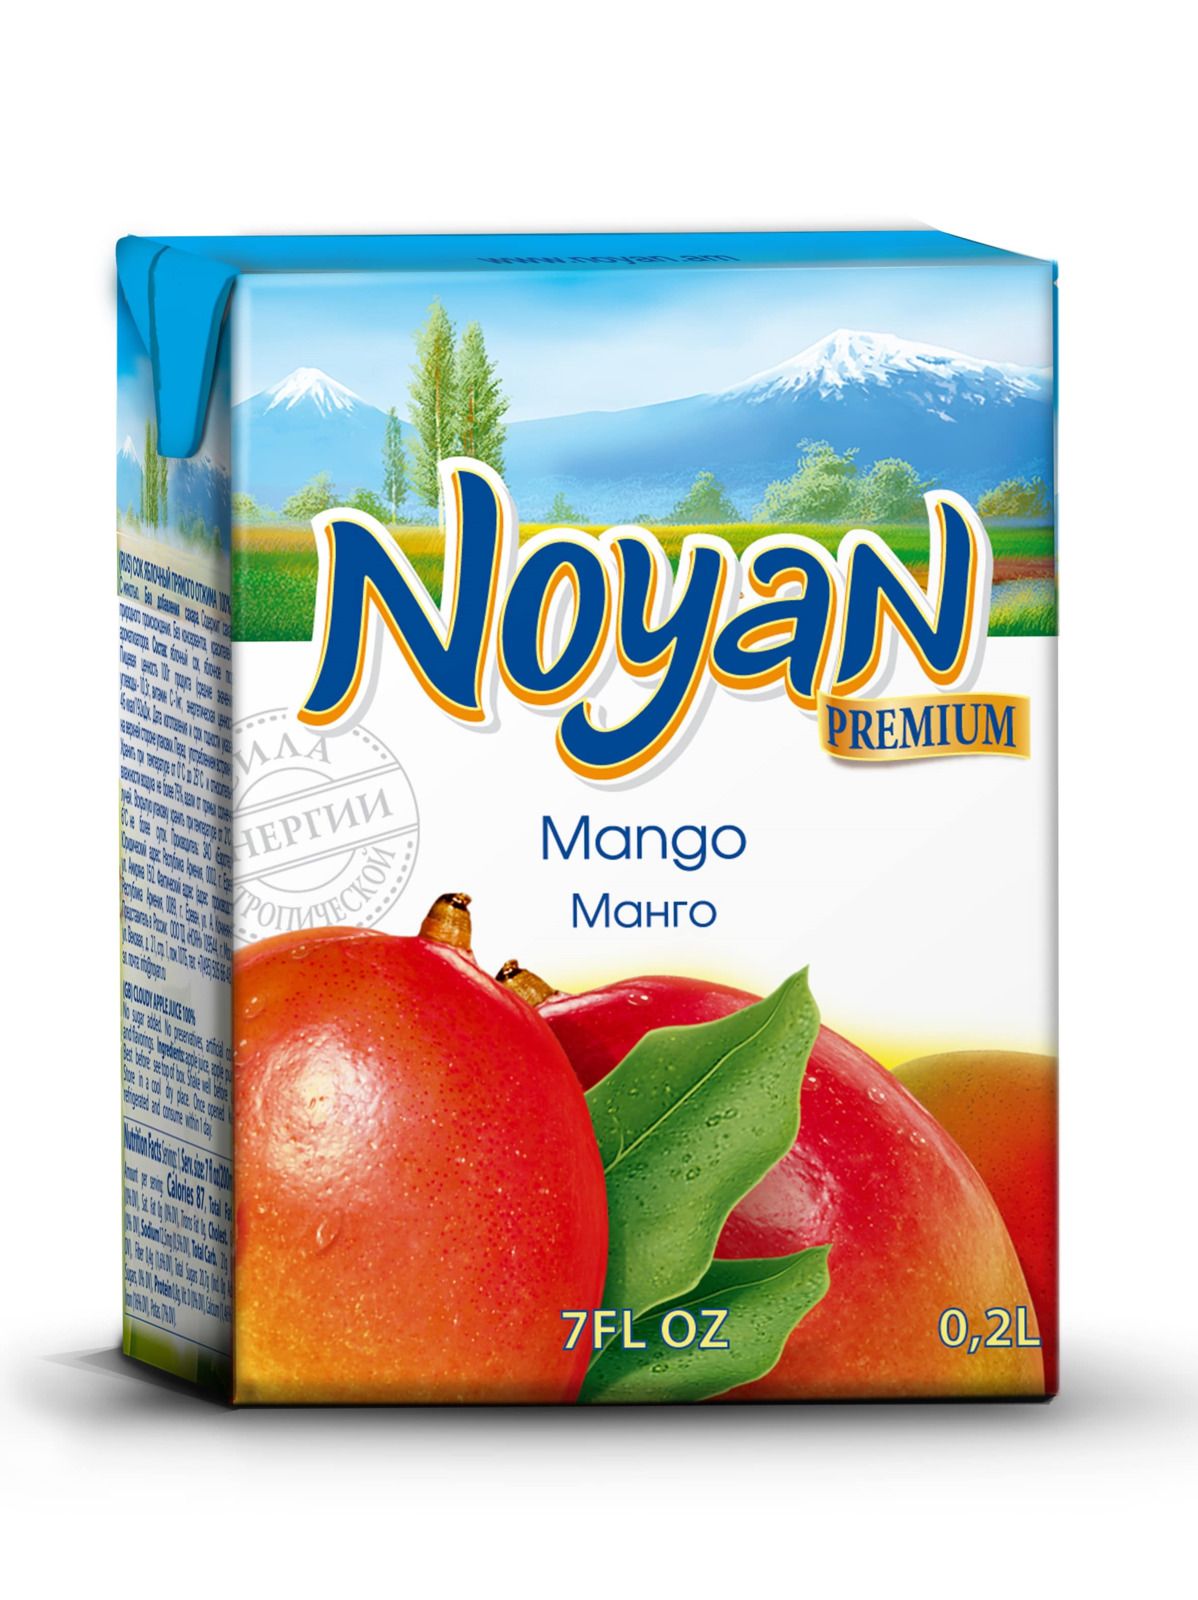   Noyan Premium, 200 